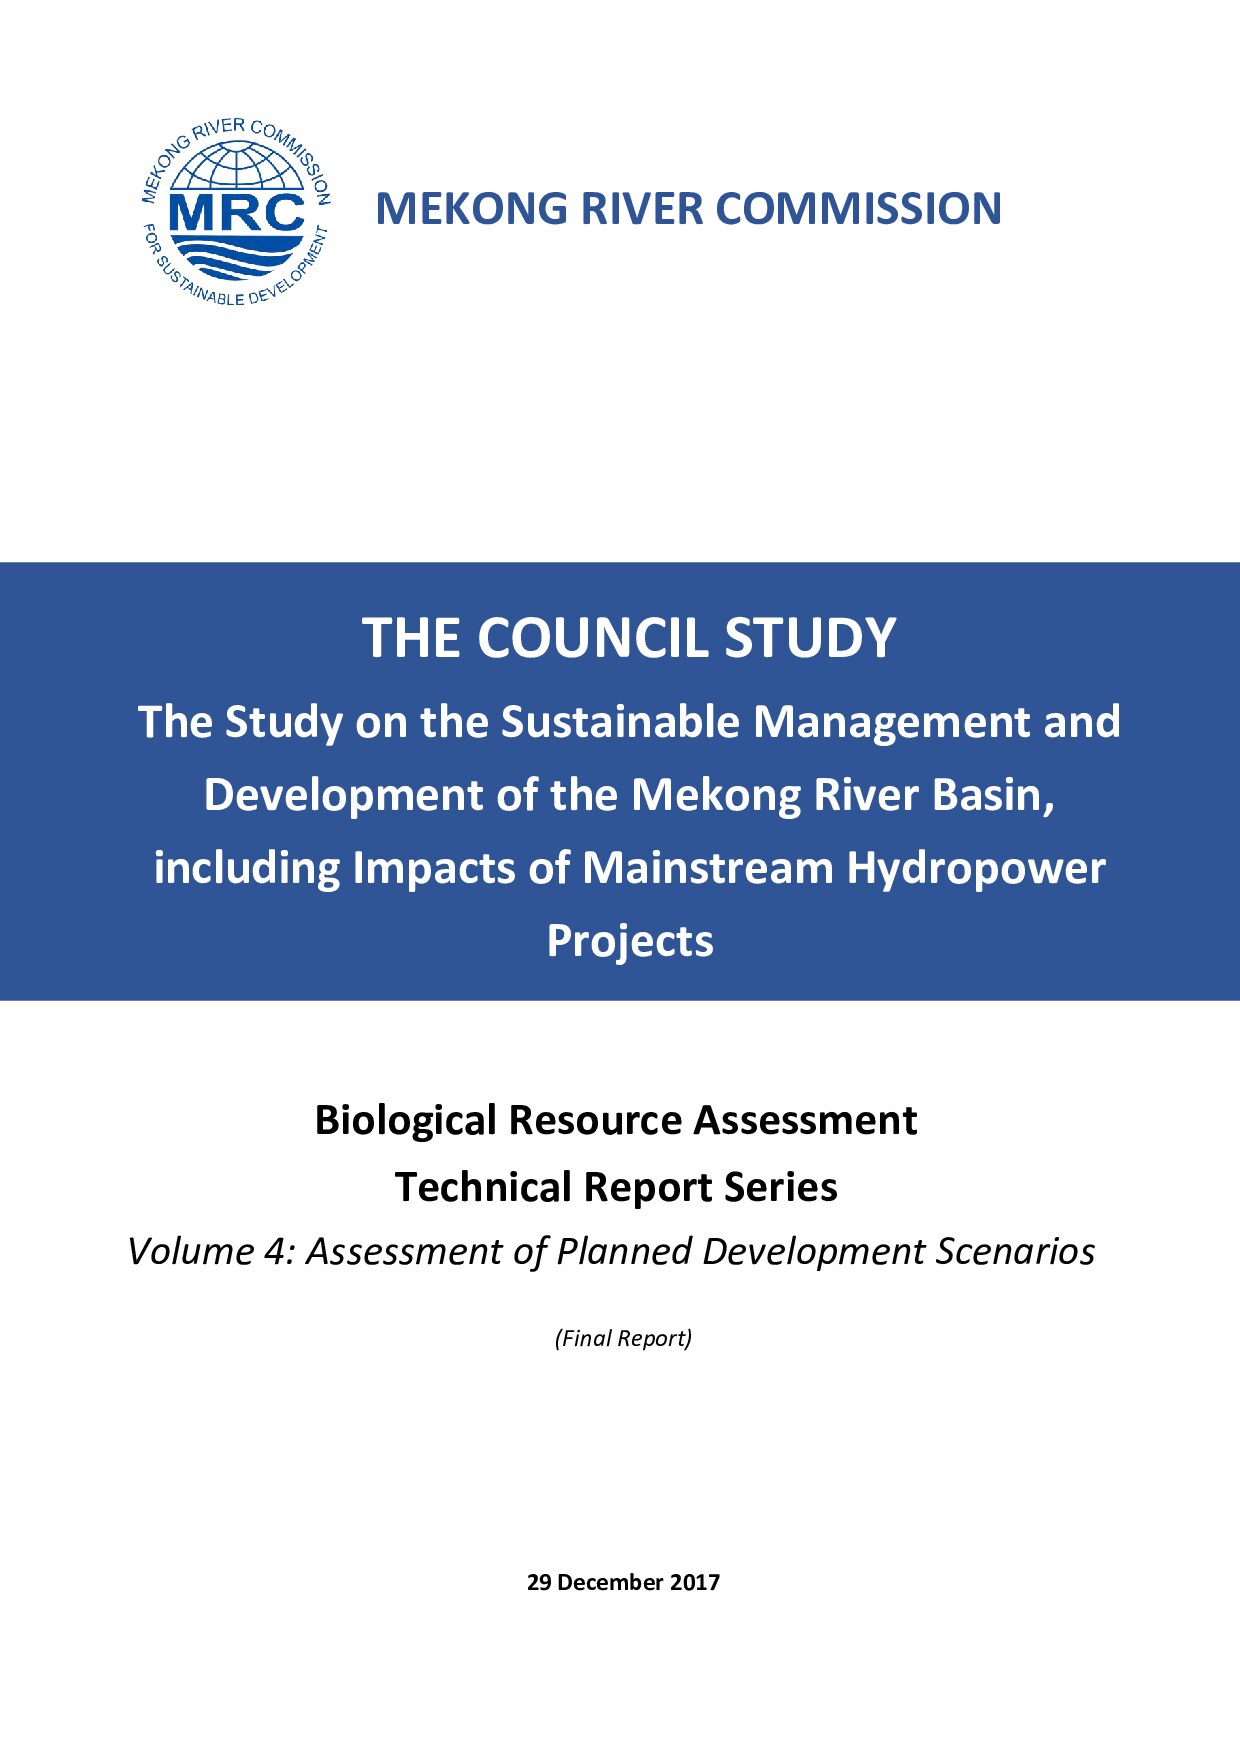 Biological Resource Assessment Technical Report Series Volume 4: Assessment of Planned Development Scenarios